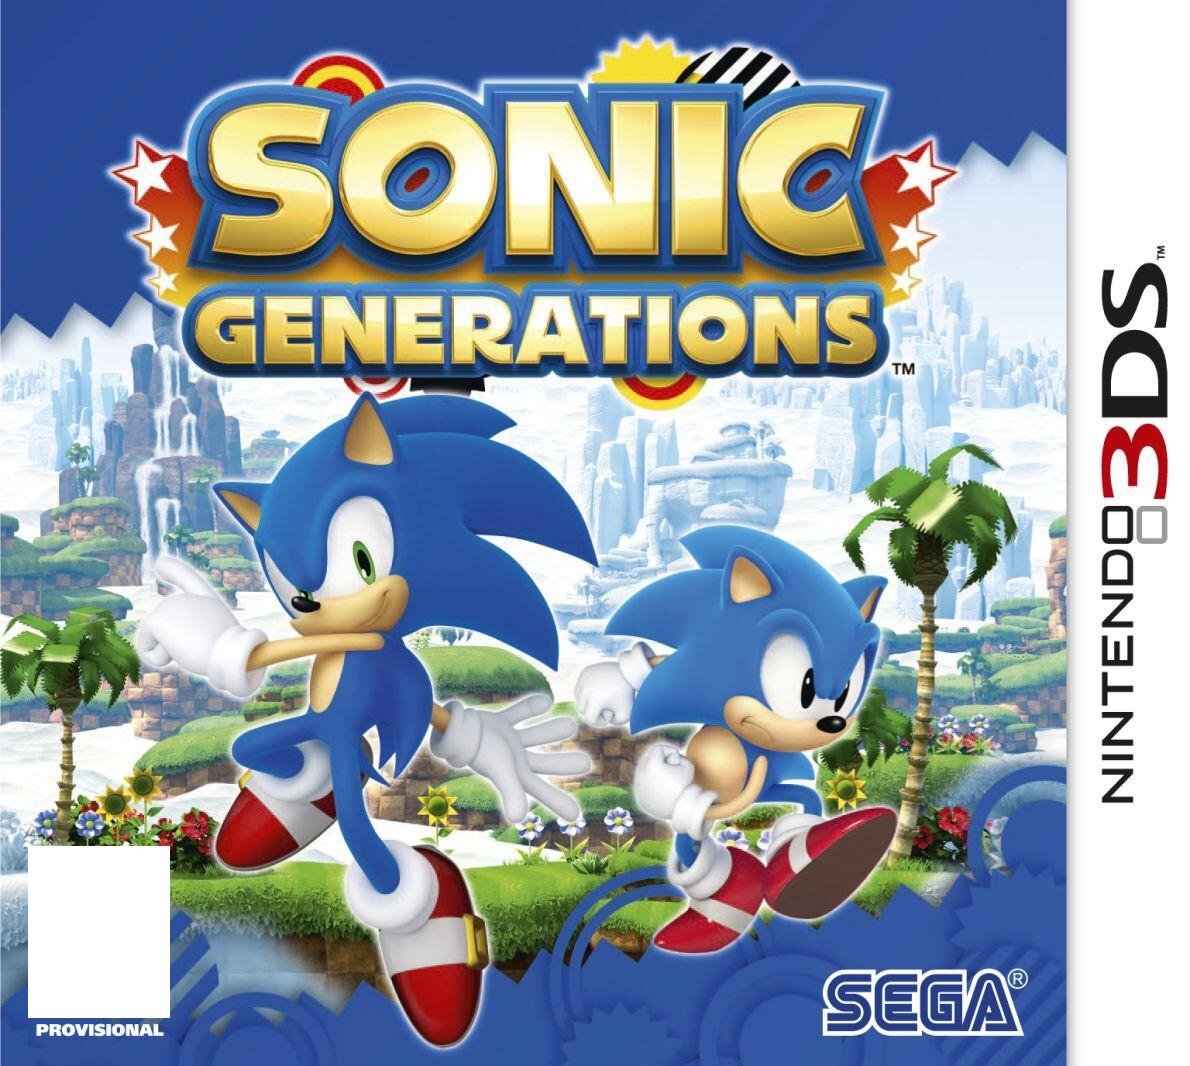 Sega Sonic Generations Nintendo 3DS